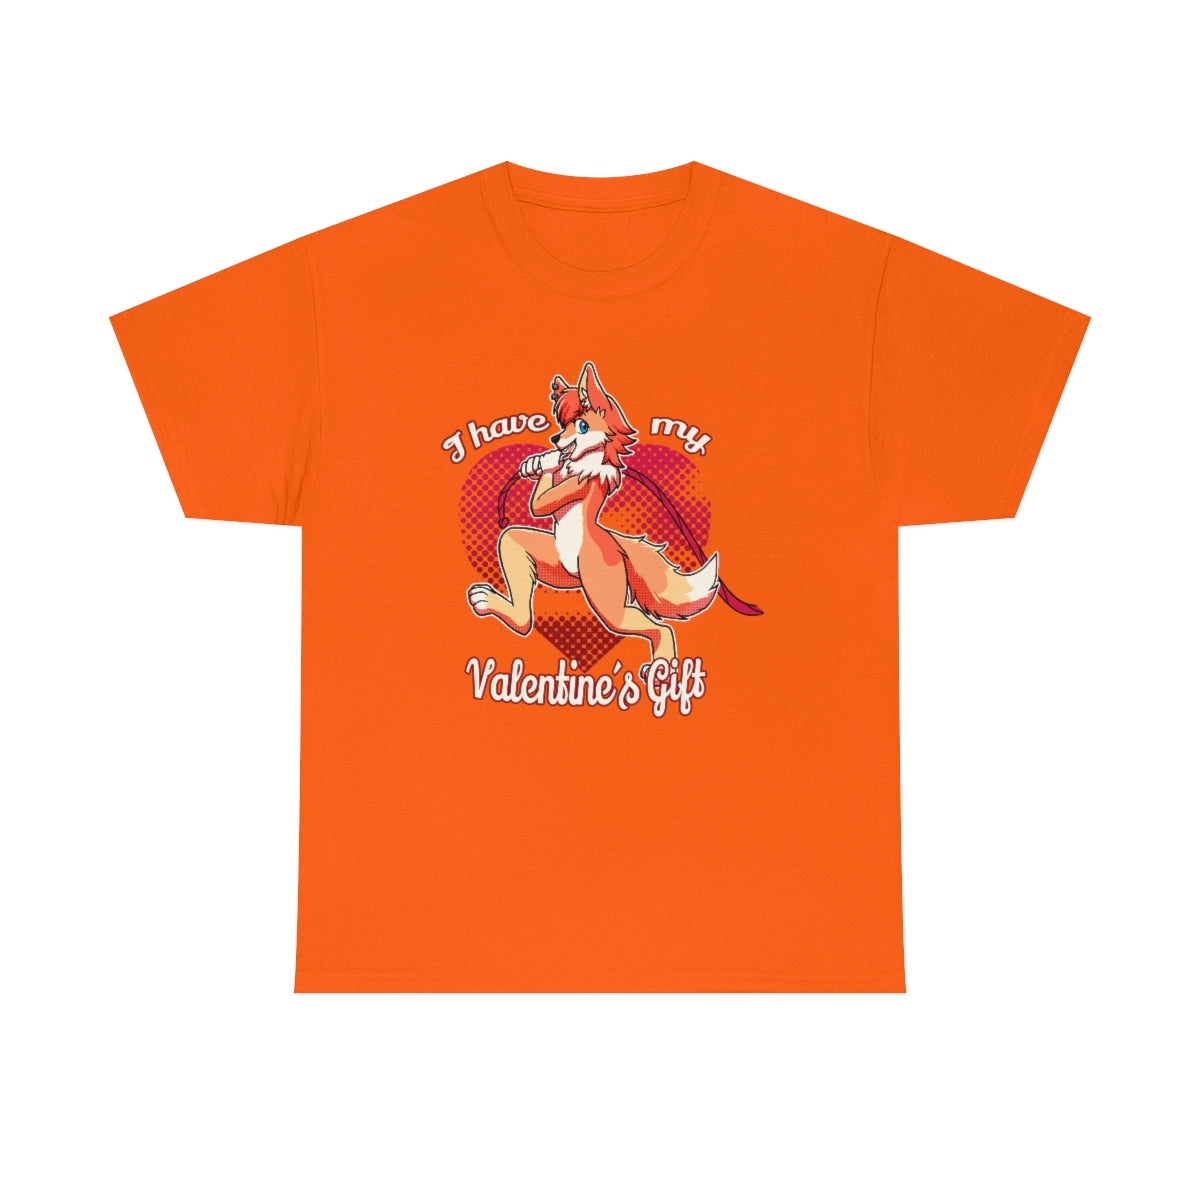 Valentine's Gift - T-Shirt T-Shirt Artworktee Orange S 